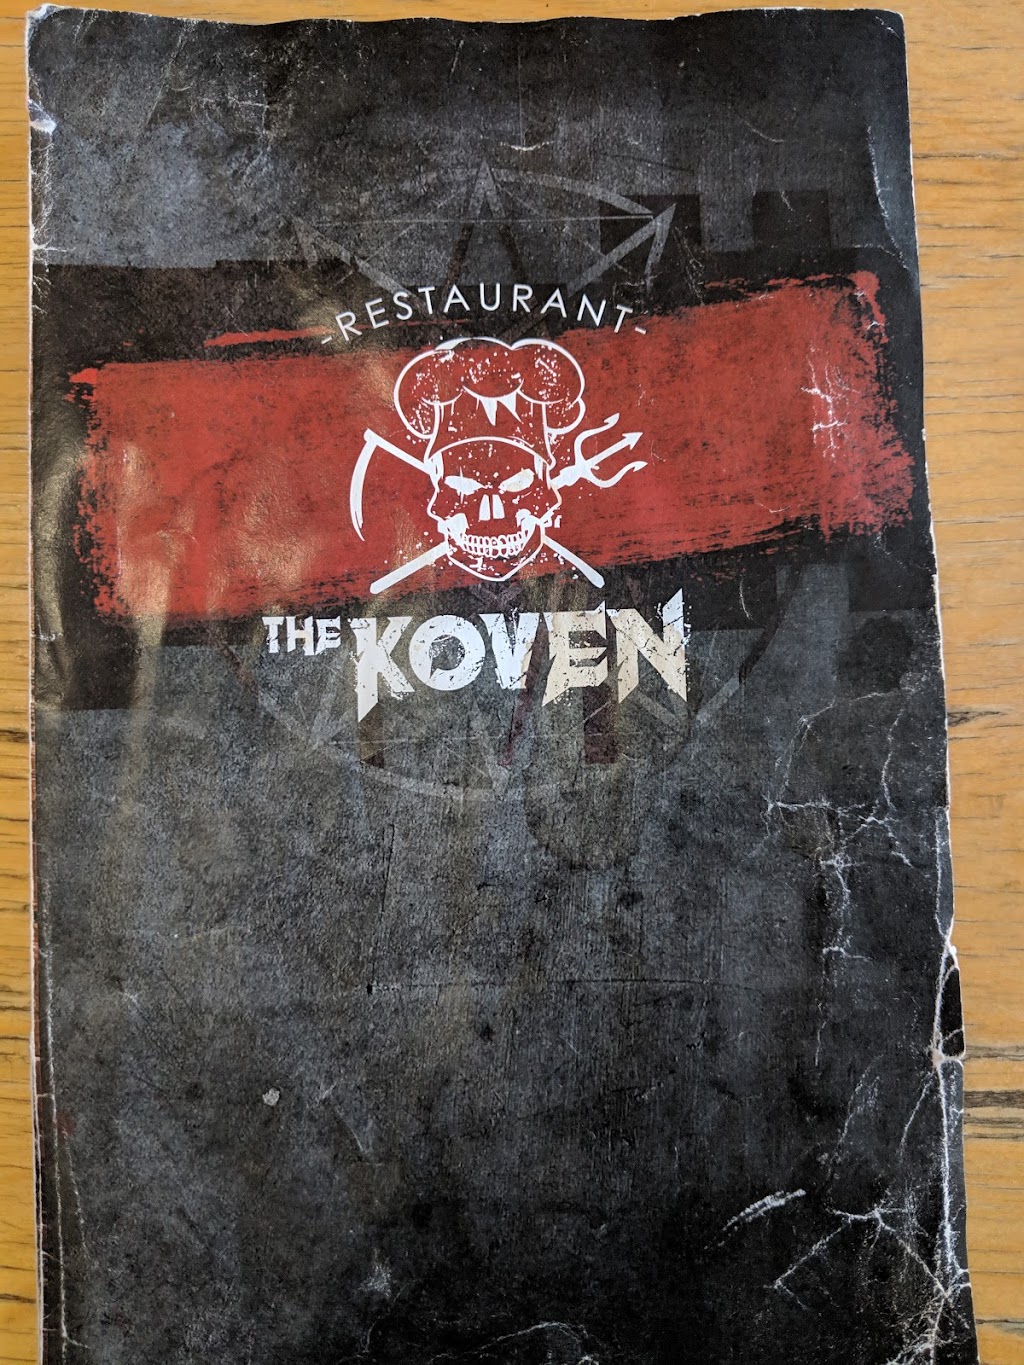 The Koven | restaurant | 93 Murray St, Ottawa, ON K1N 5M5, Canada | 6134225666 OR +1 613-422-5666